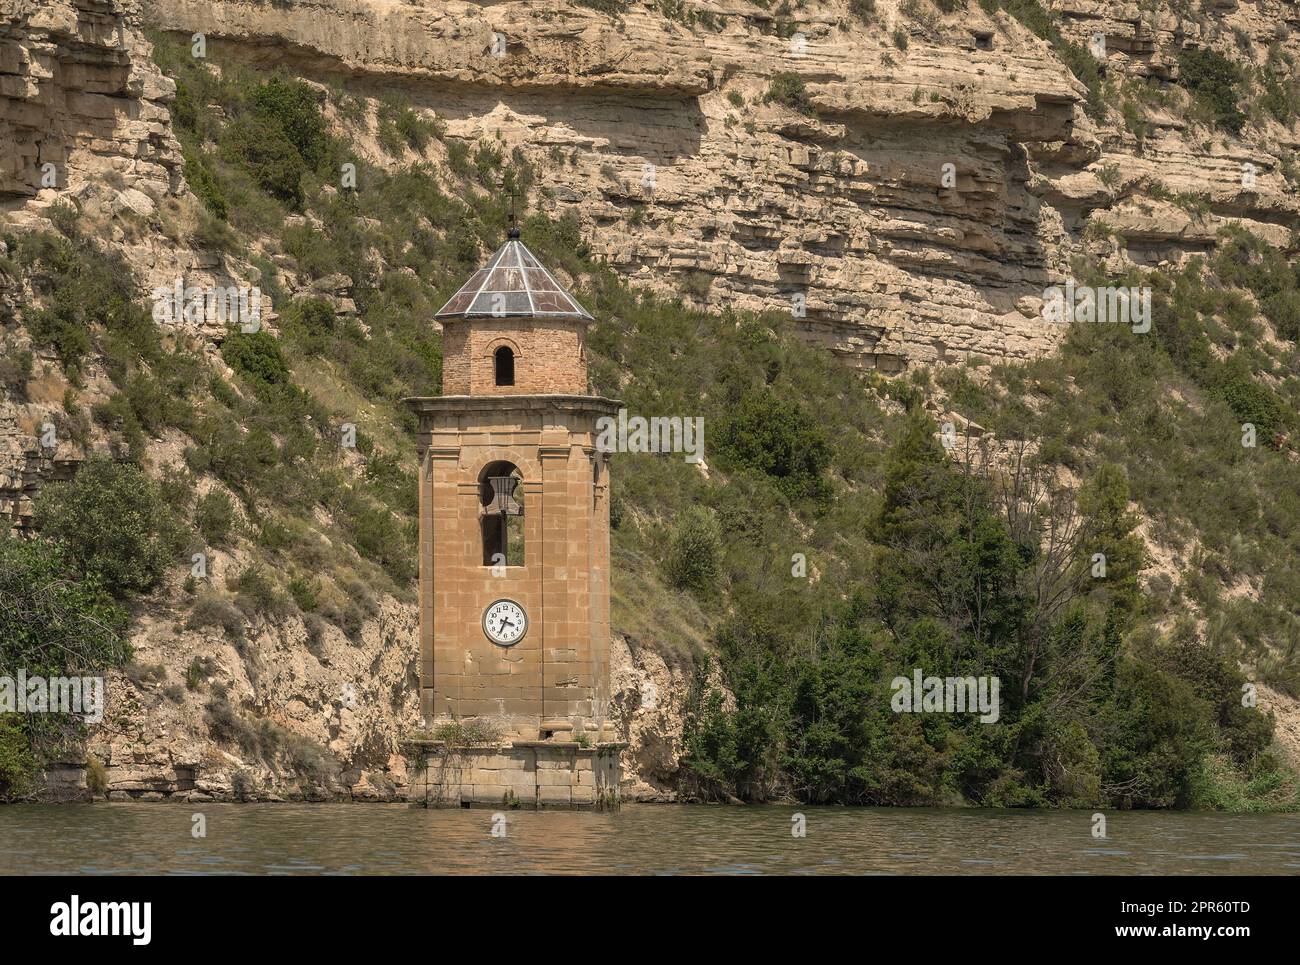 Tower of the Church of San Juan Evangelista in the Ribarroja reservoir, Aragon, Spain Stock Photo